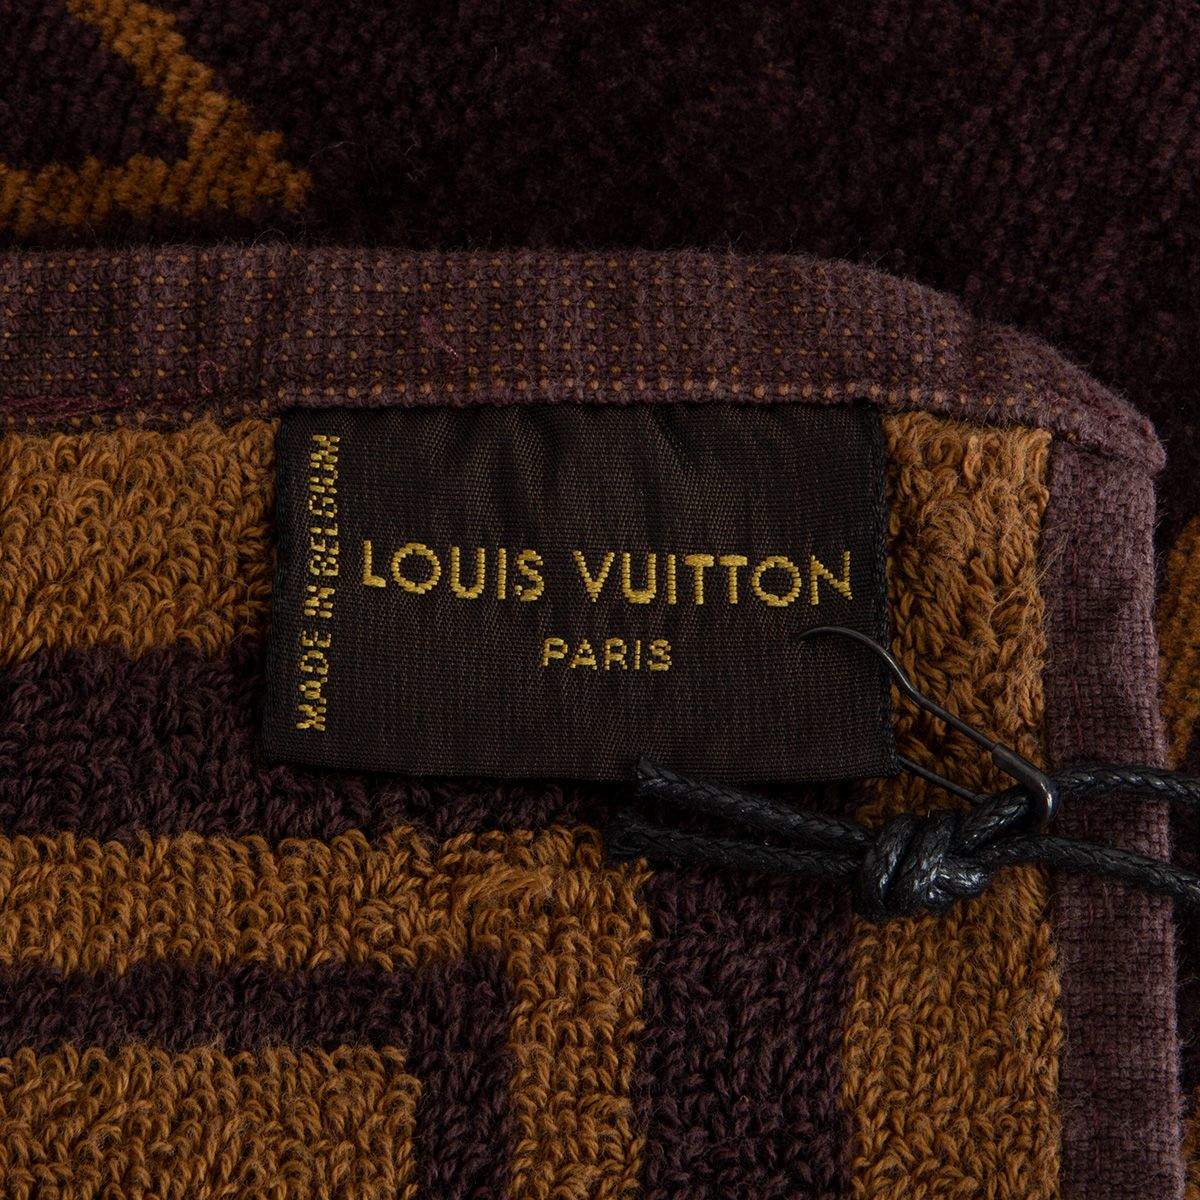 LOUIS VUITTON Monogram Classic Beach Towel Pink